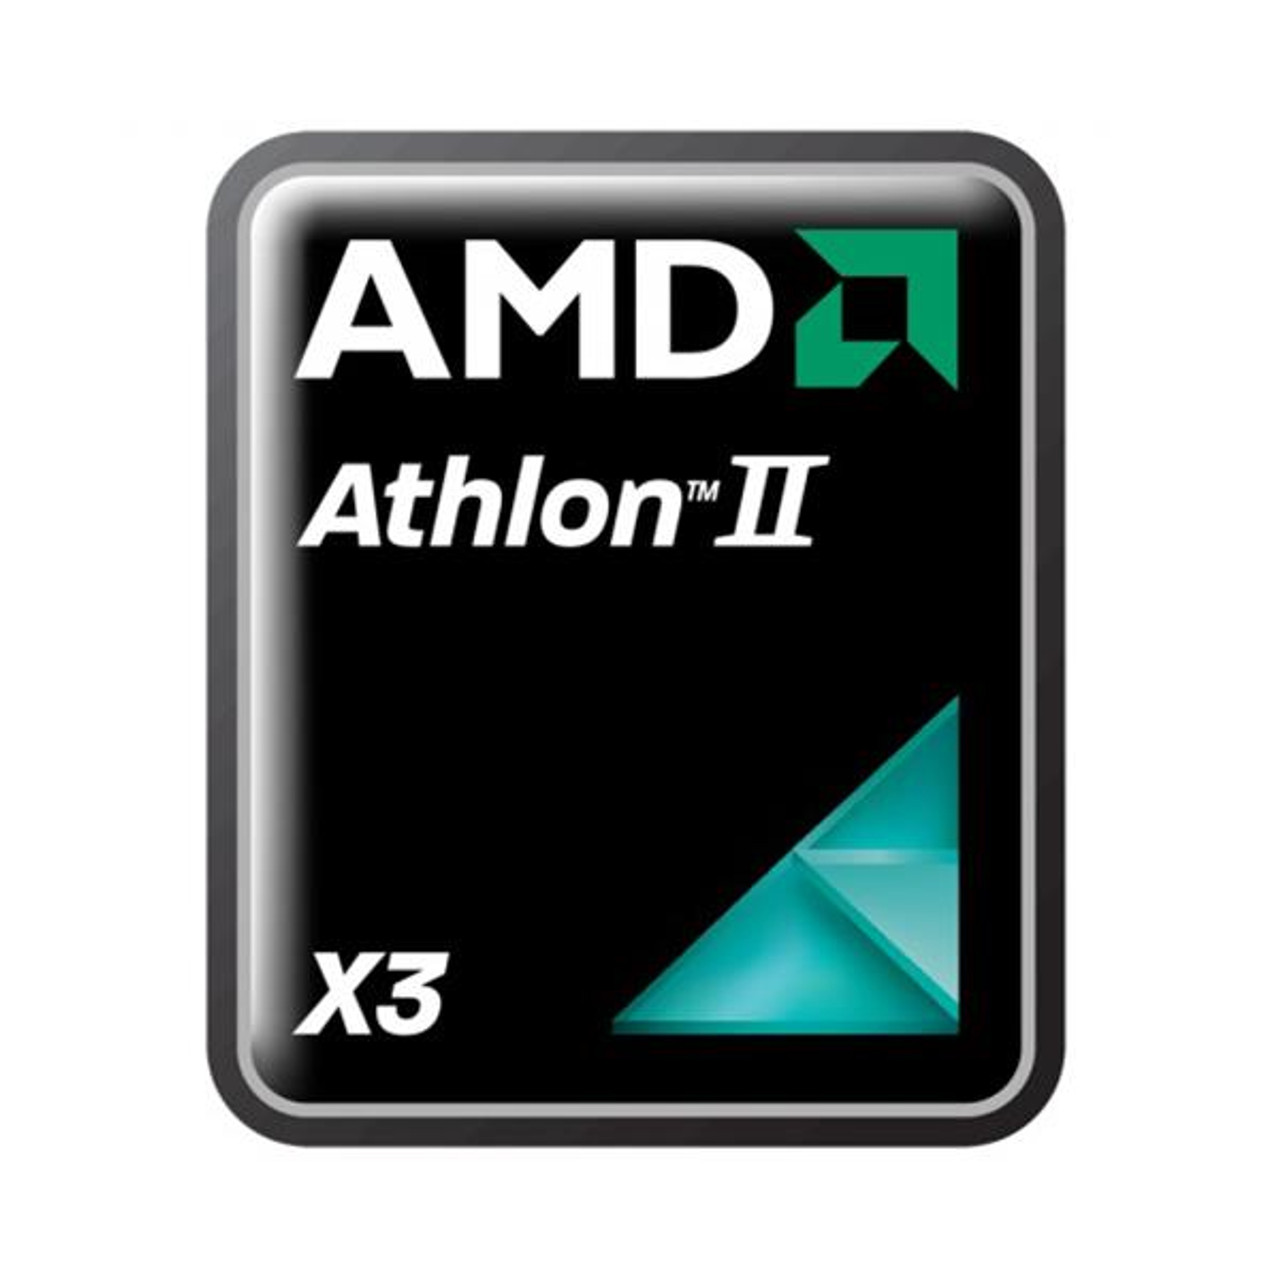 AMD Athlon II X3 435 3-Core 2.90GHz 1.50MB L2 Cache Socket AM2+ Processor